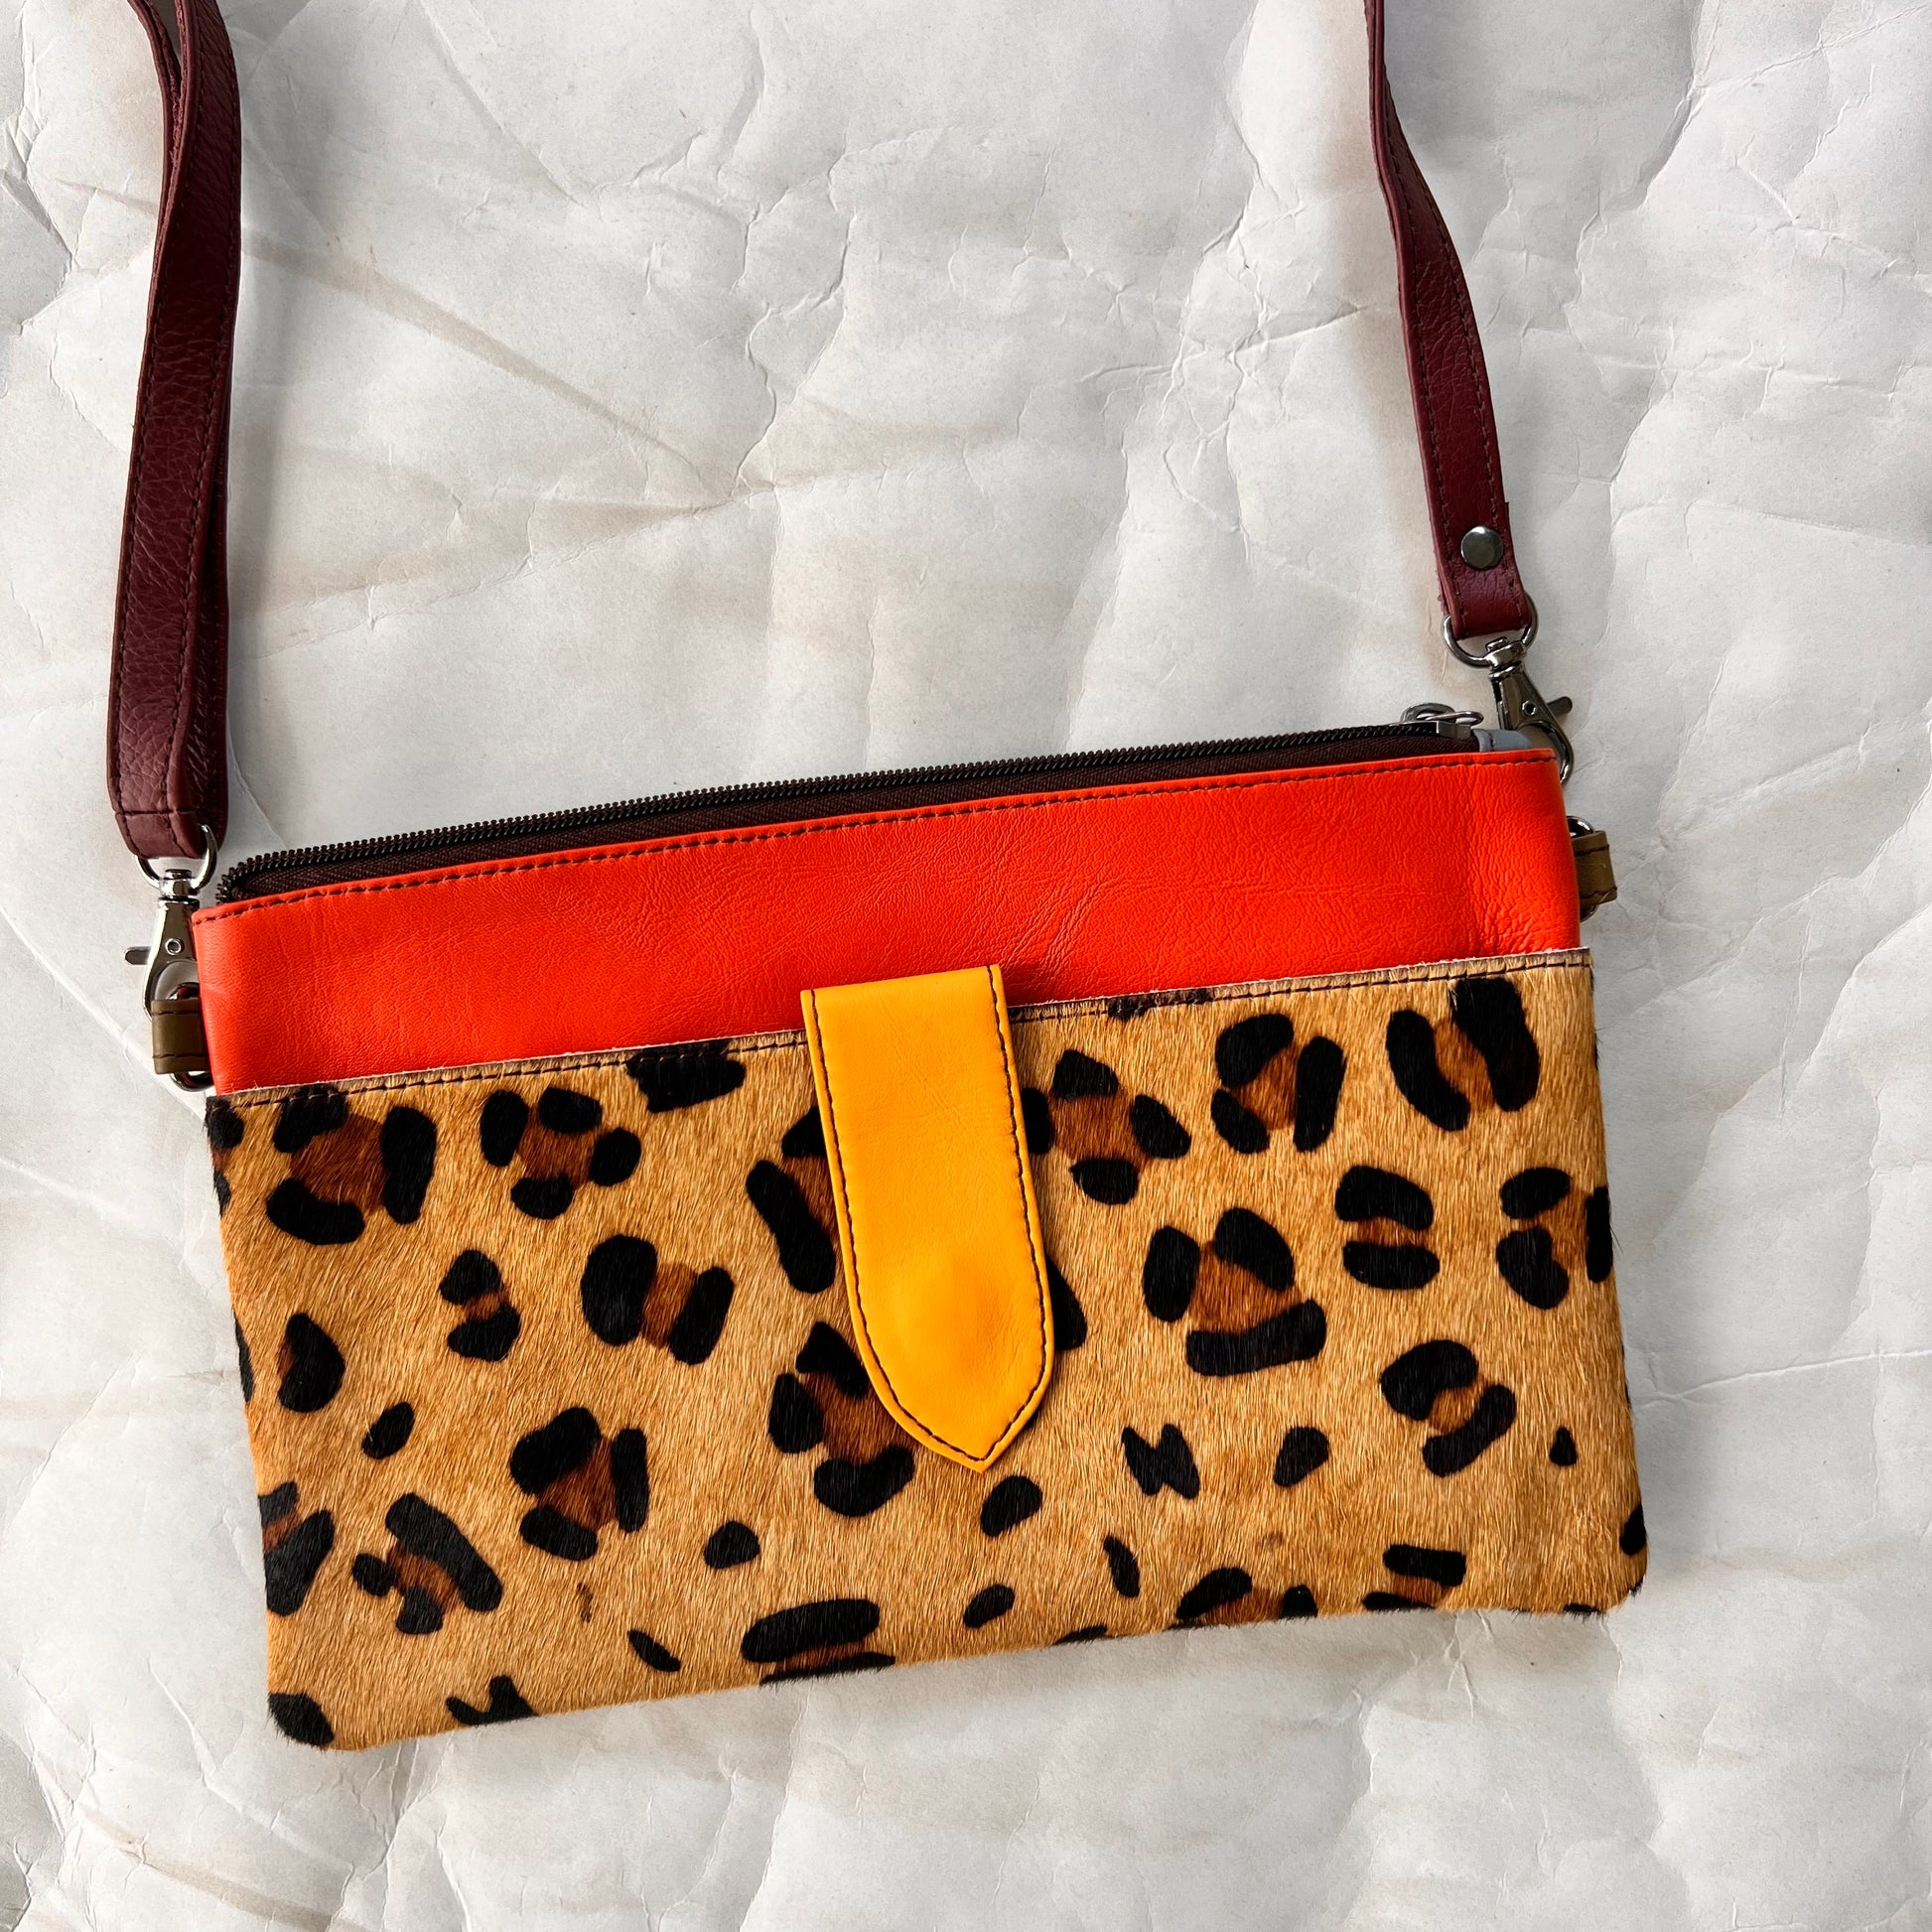 orange rectangular bag with cheetah print pocket, brown shoulder strap.